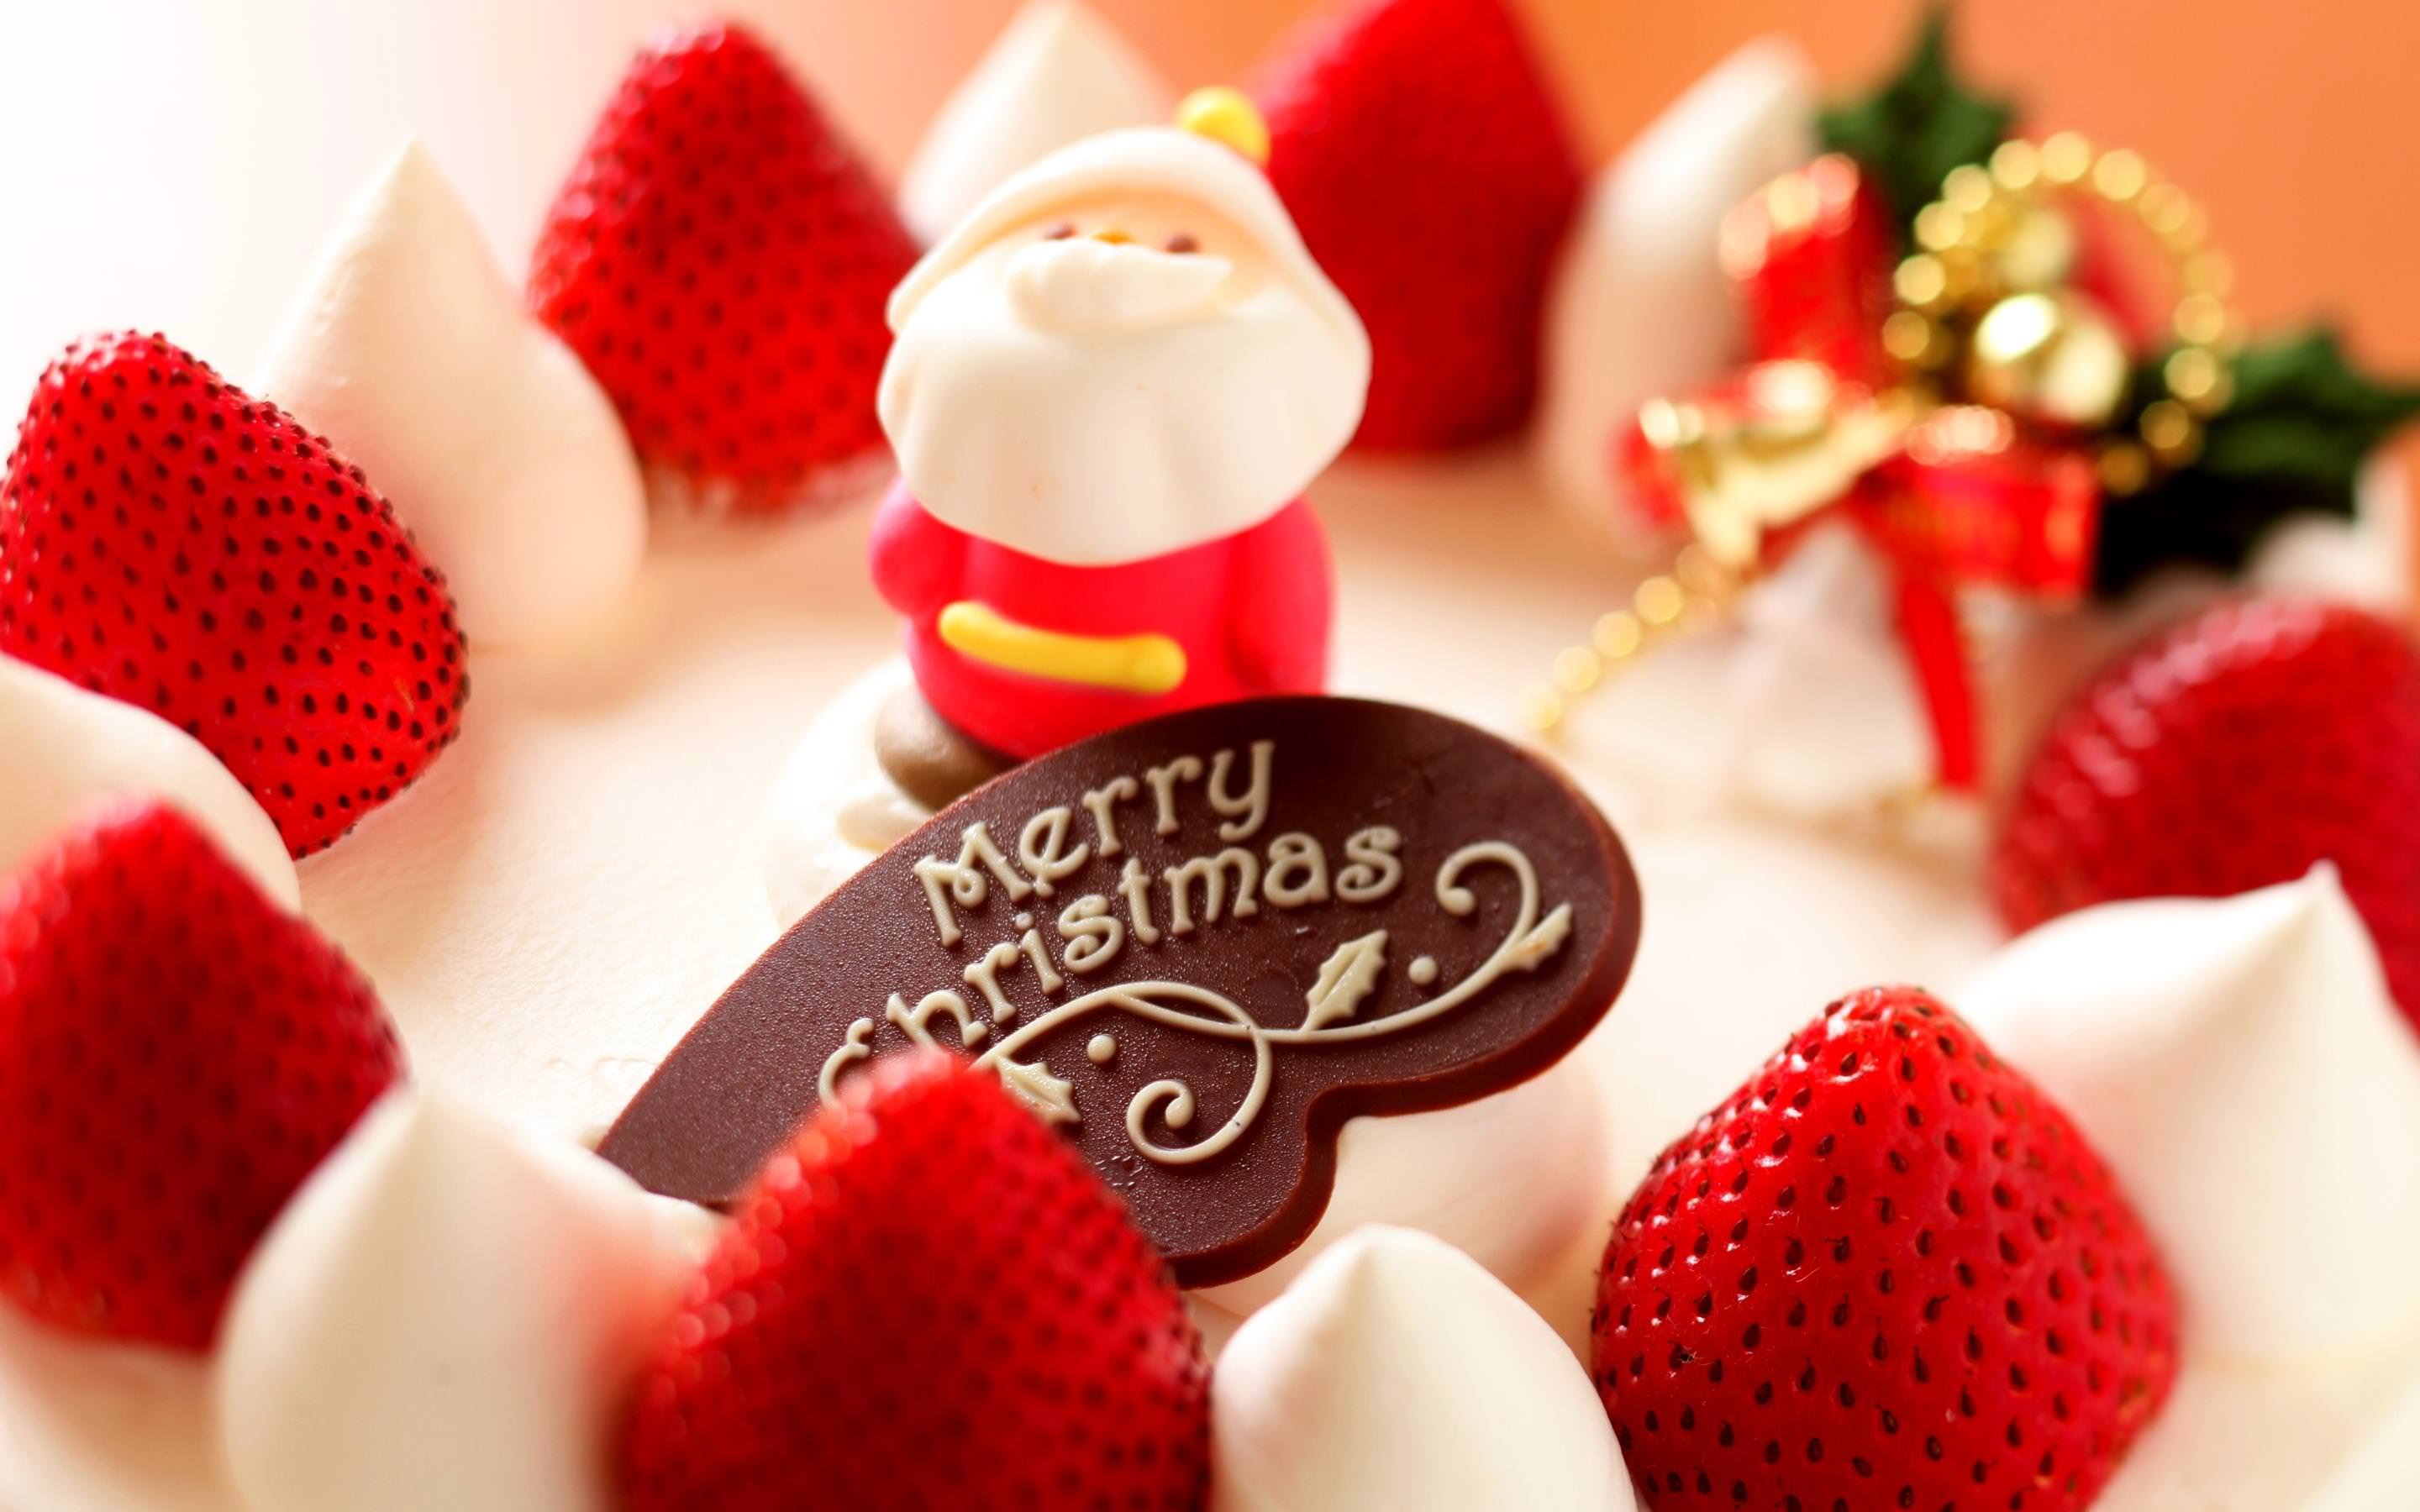 Merry Christmas Strawberry Dessert Wallpaper for Desktop 2880x1800